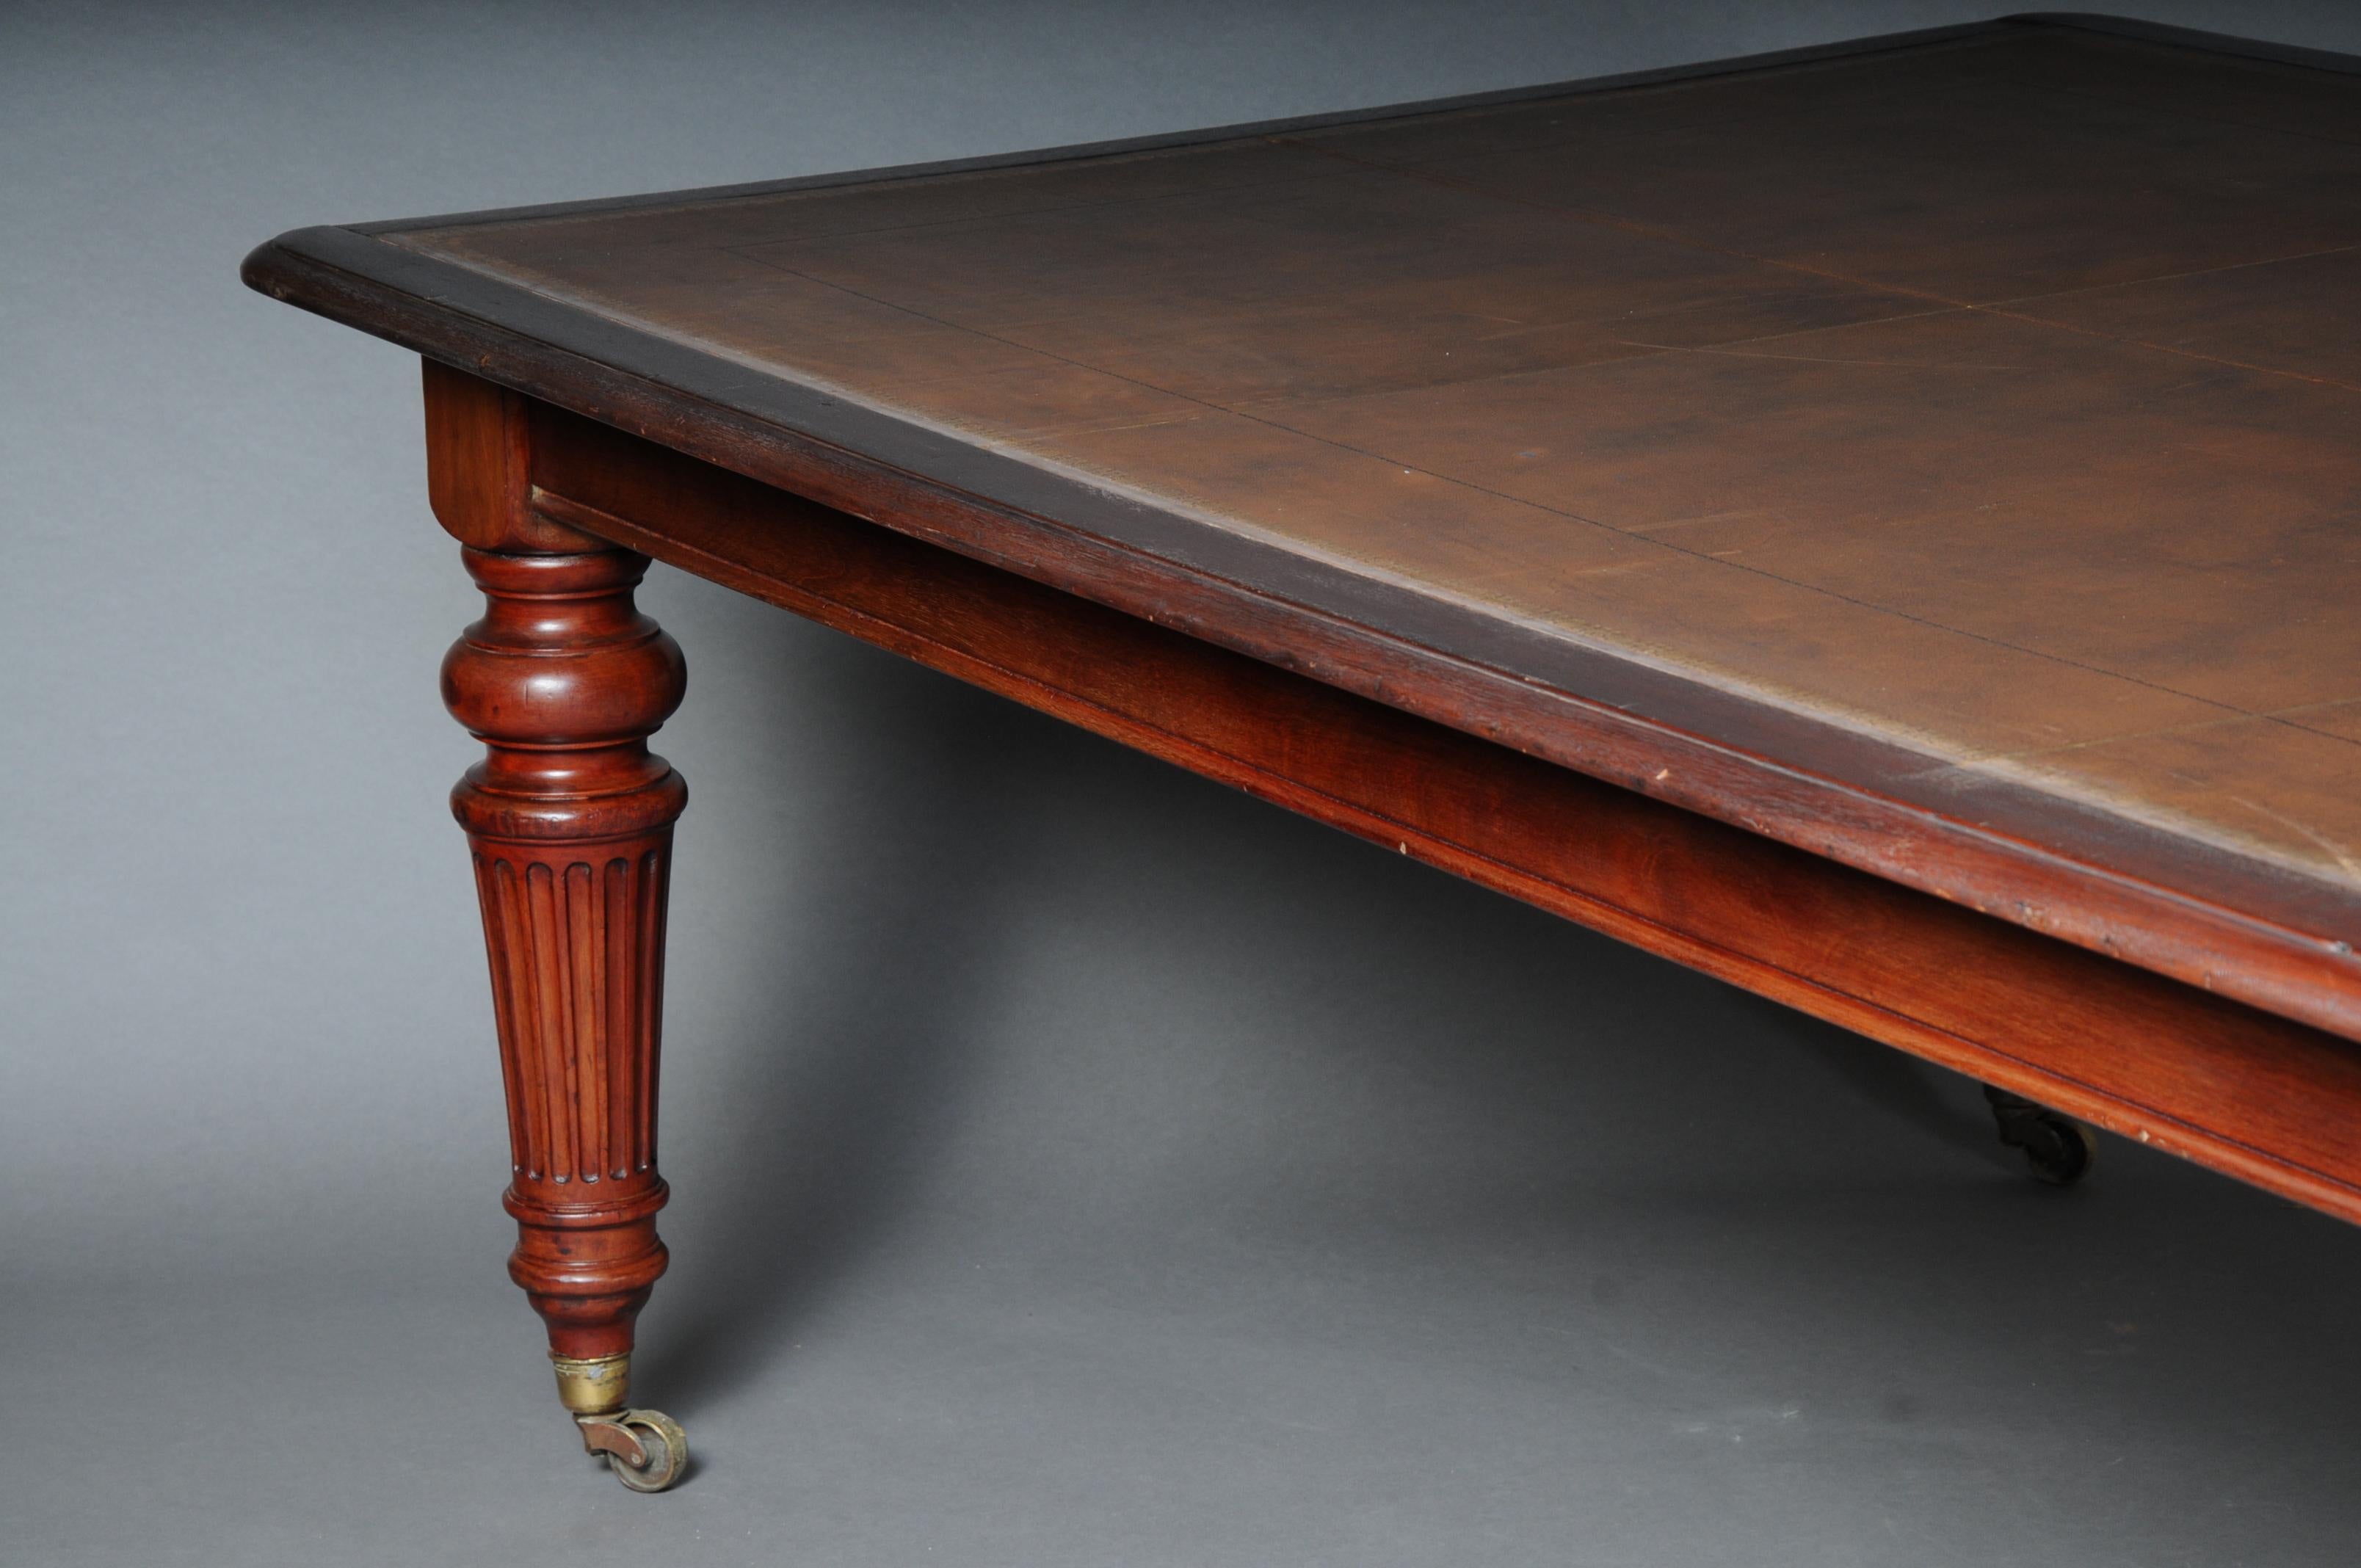 Victorian Monumental English Table or Partner Desk or Desk, 19th Century